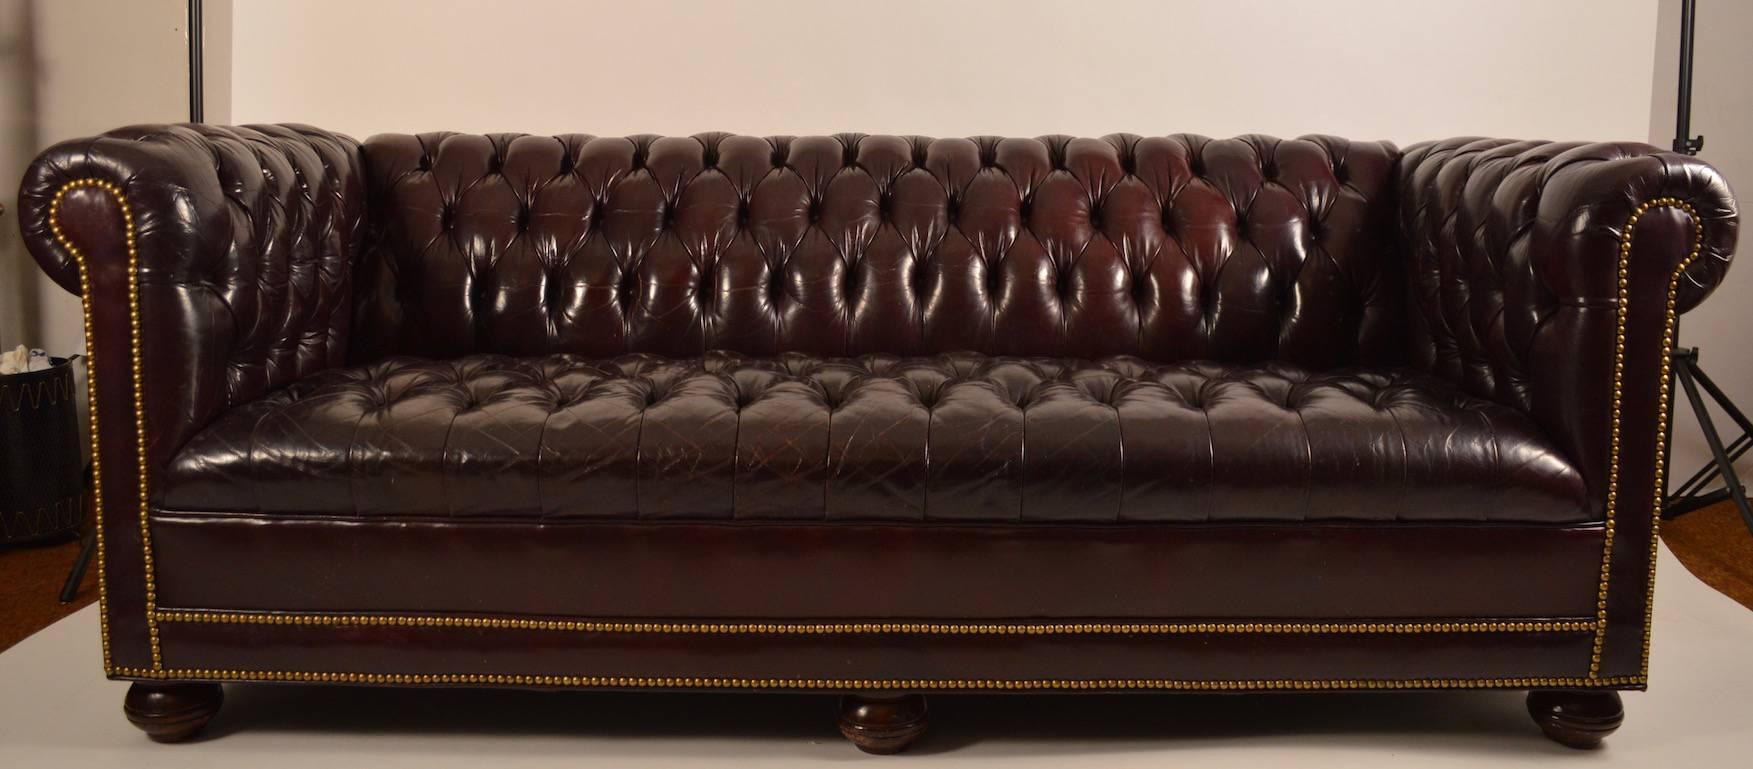 classic leather sofas